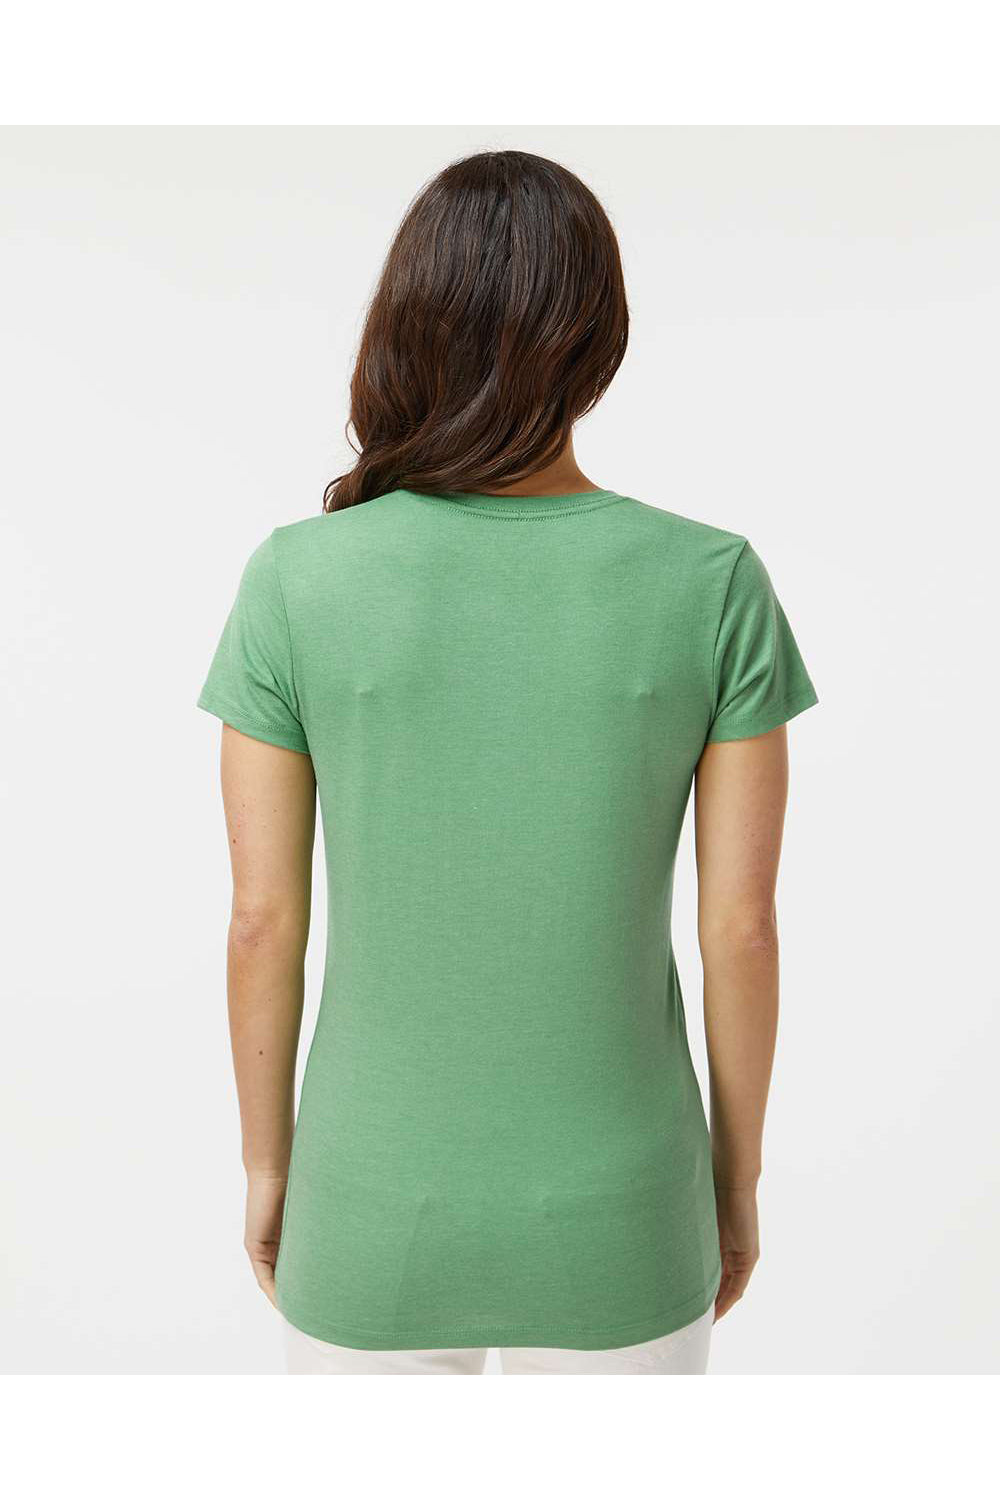 Kastlfel 2021 Womens RecycledSoft Short Sleeve Crewneck T-Shirt Green Model Back